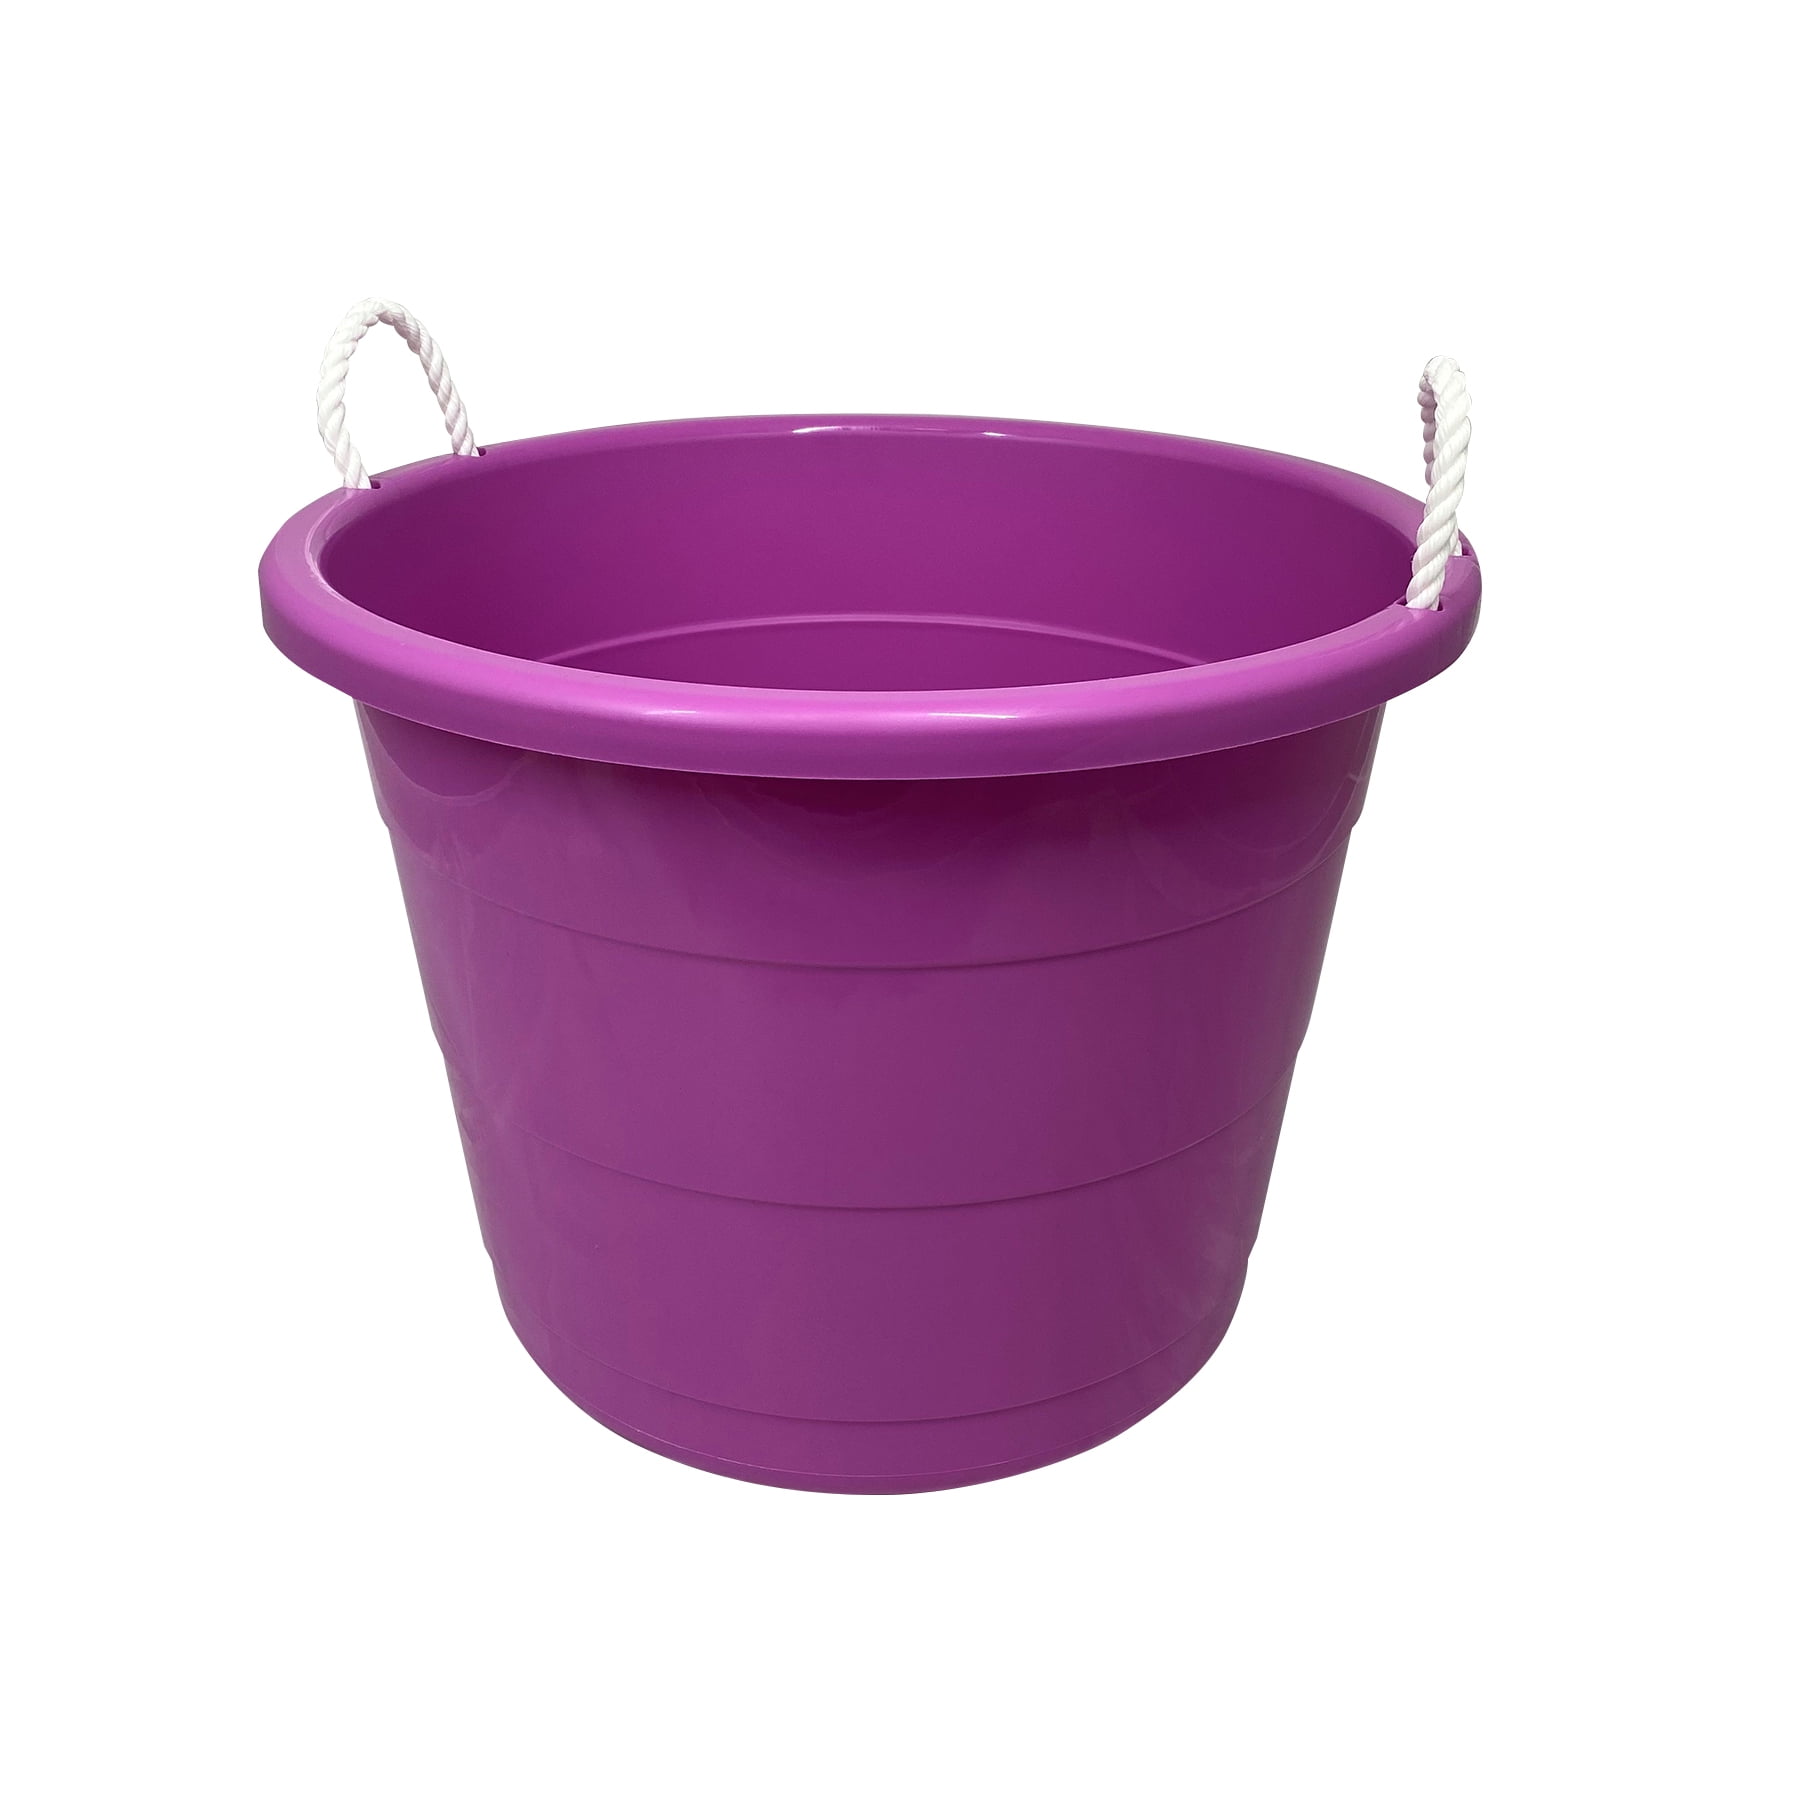 Homz 17 Gallon RopeHandled Storage Tub, Purple, Set of 2